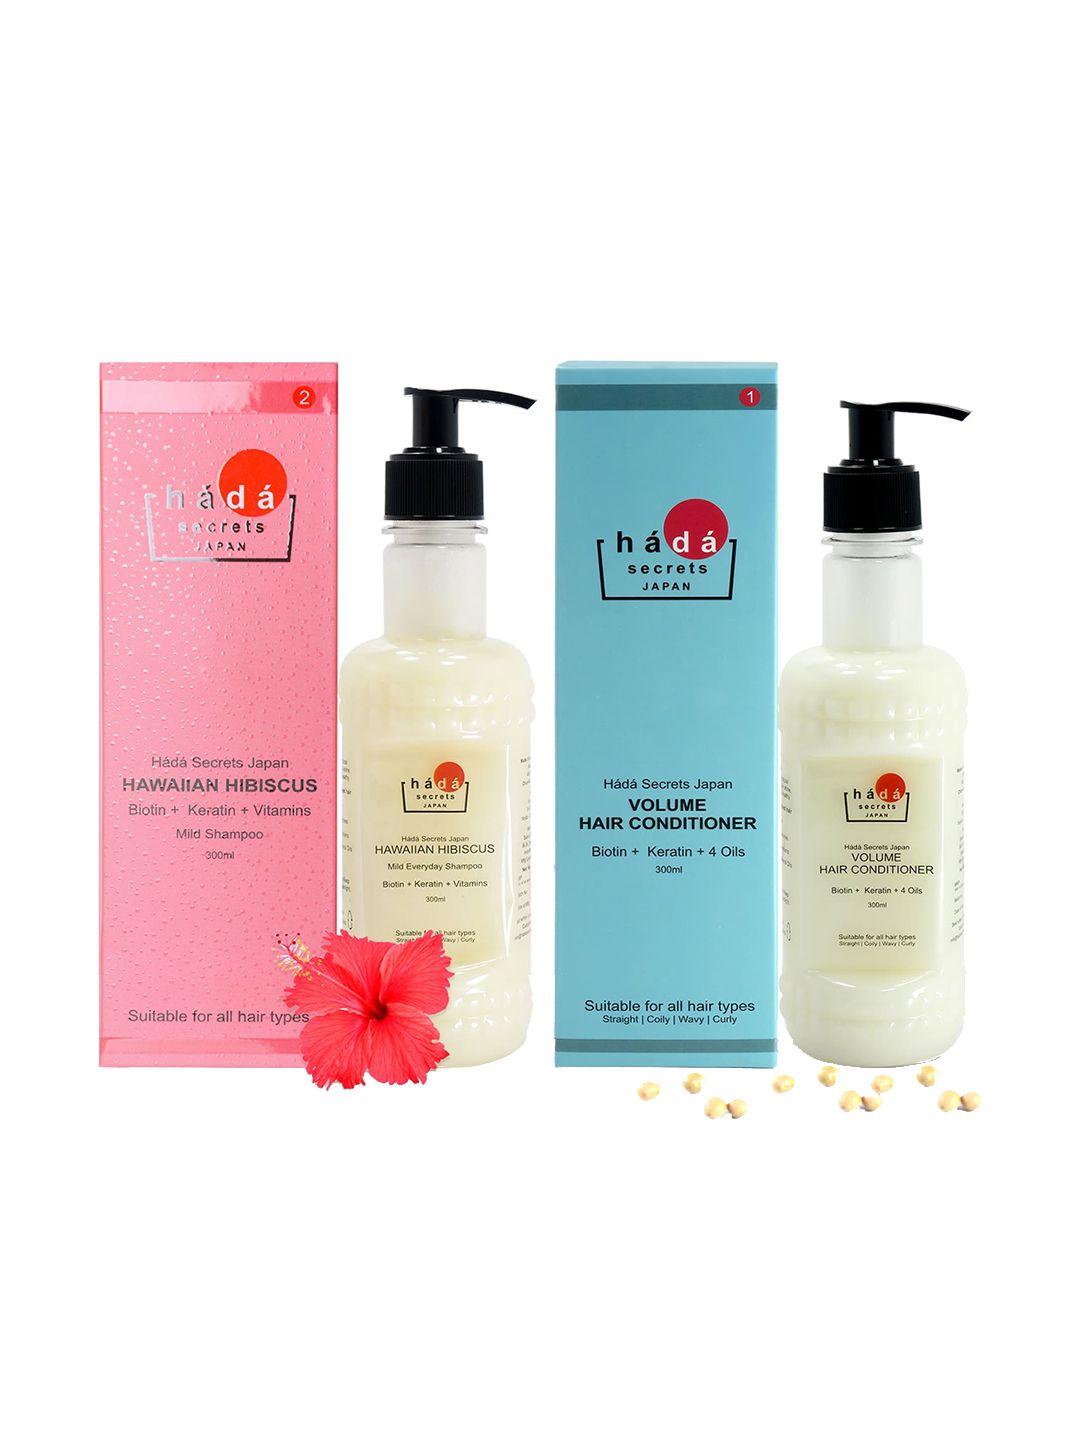 hada secrets japan set of 2 hawaiian hibiscus hair shampoo & volume conditioner 600ml each